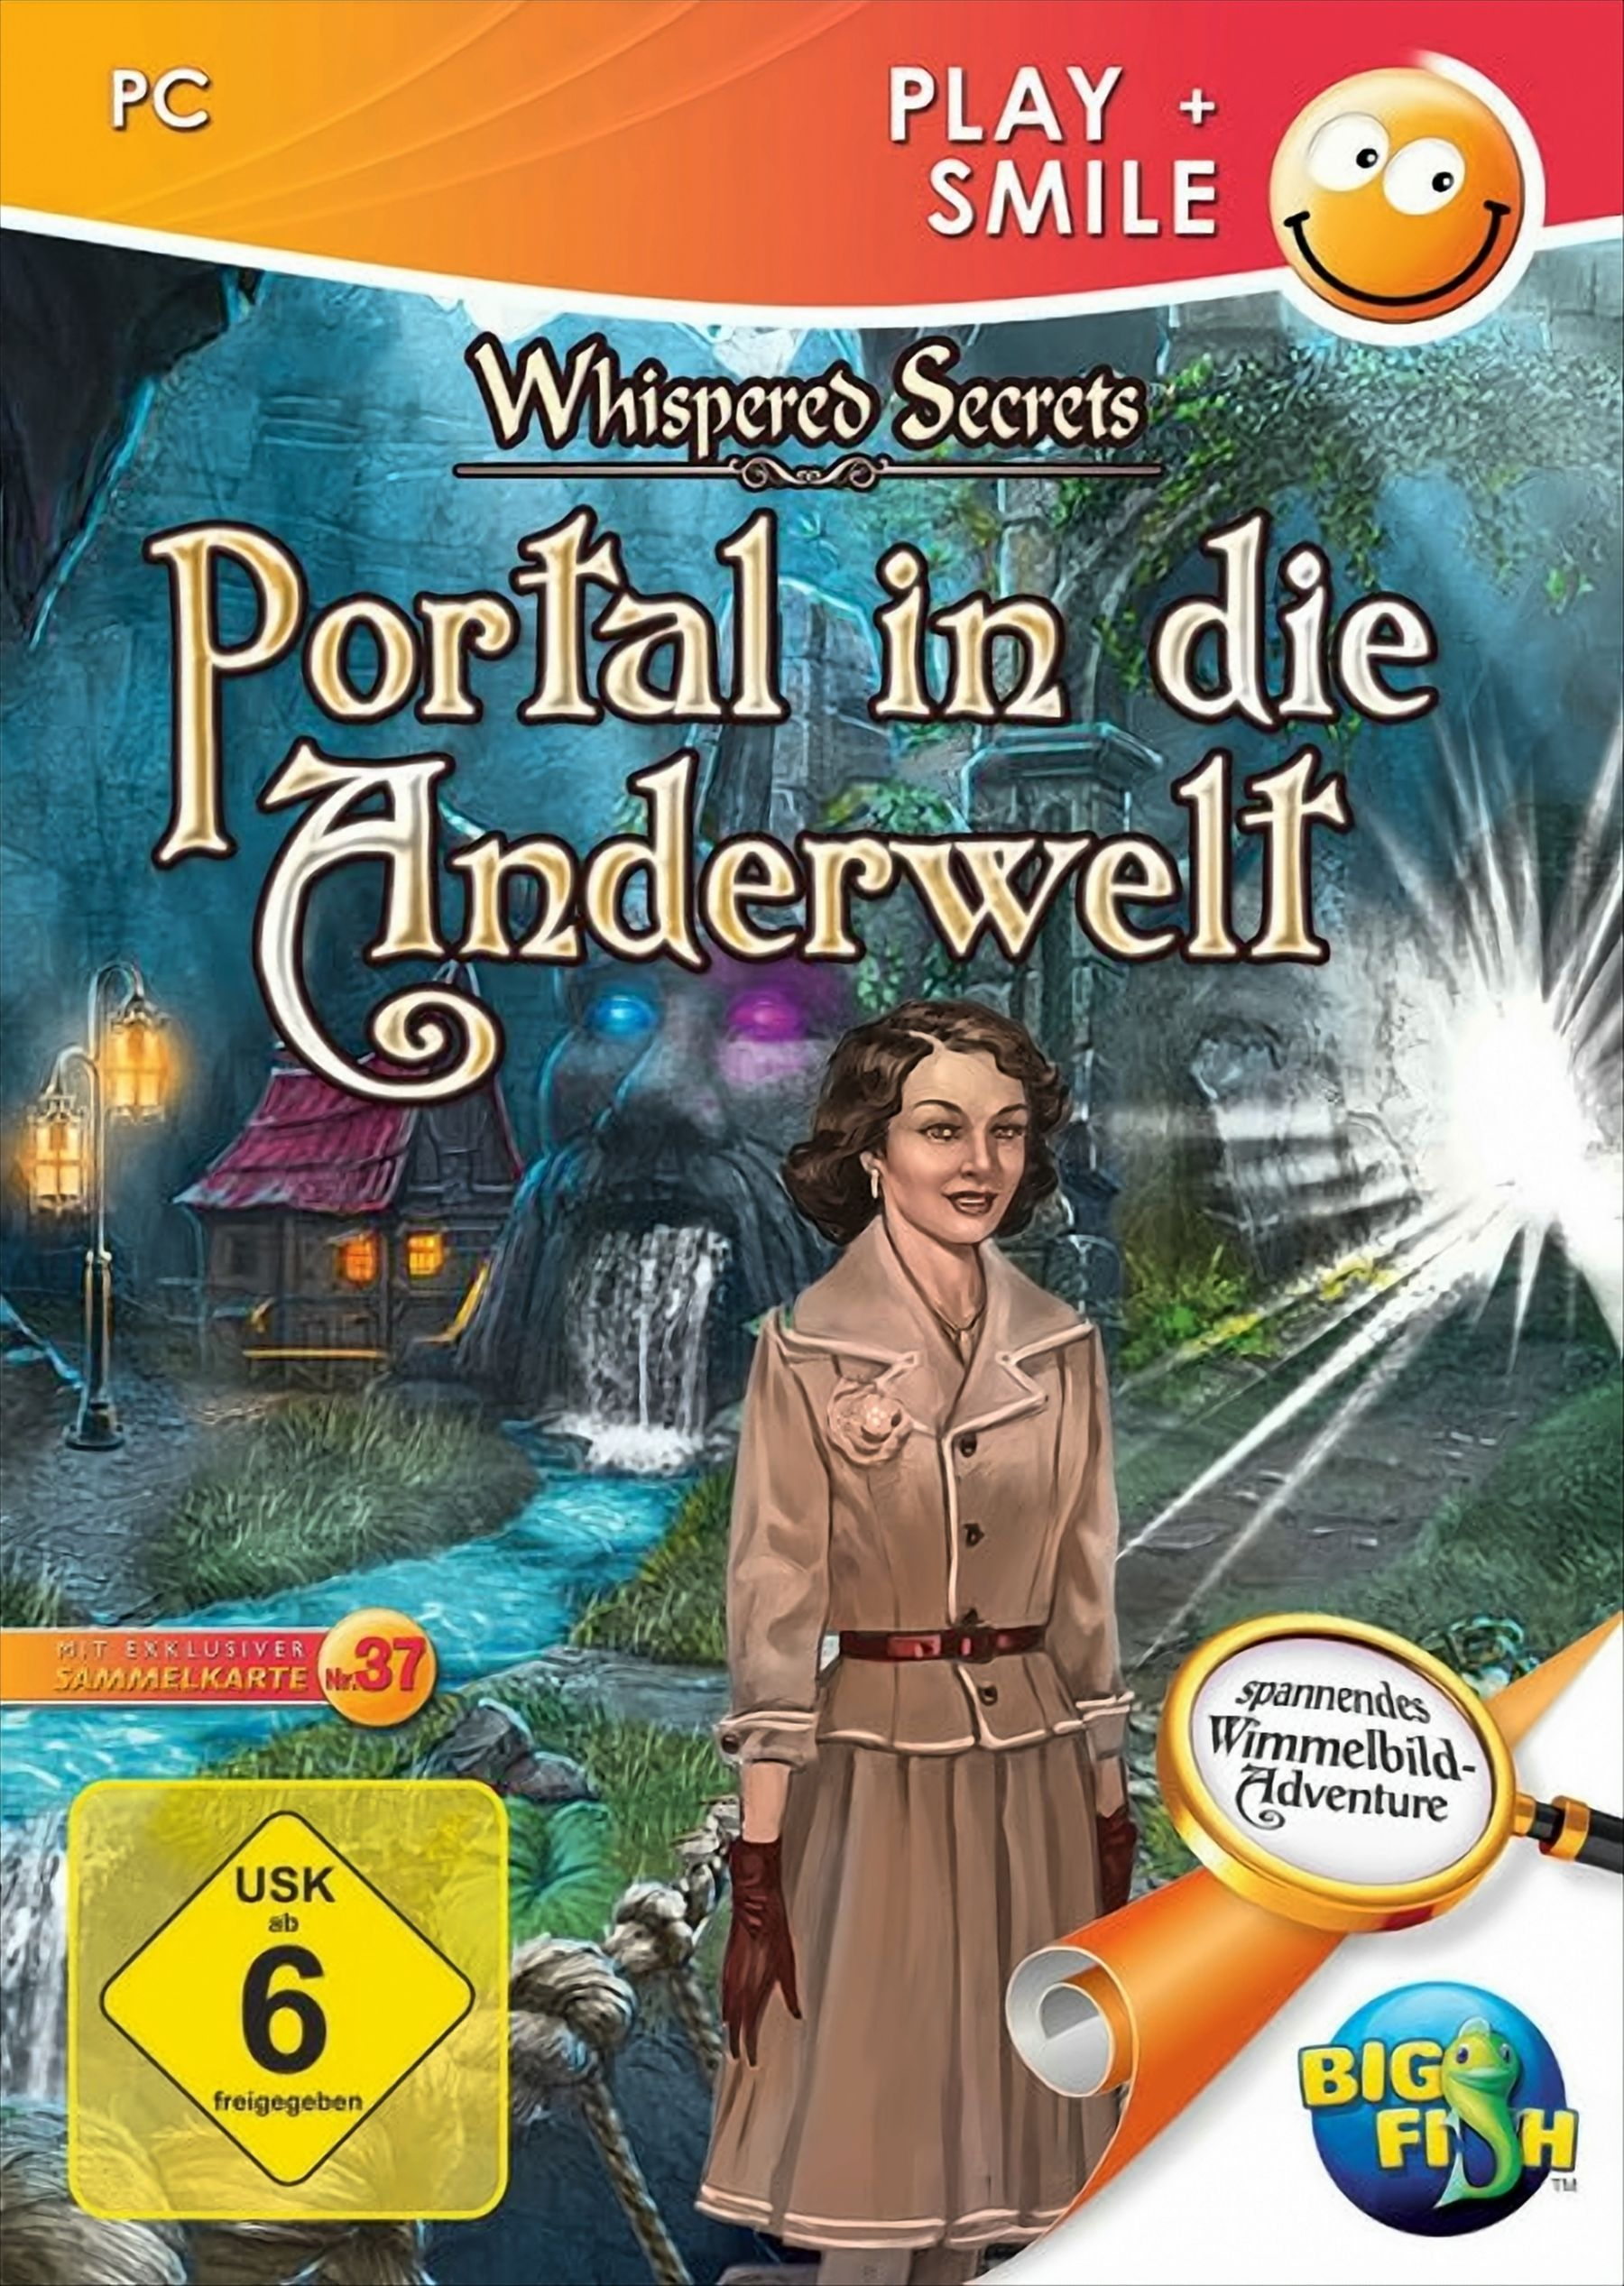 Whispered Secrets: Portal die [PC] in - Anderwelt